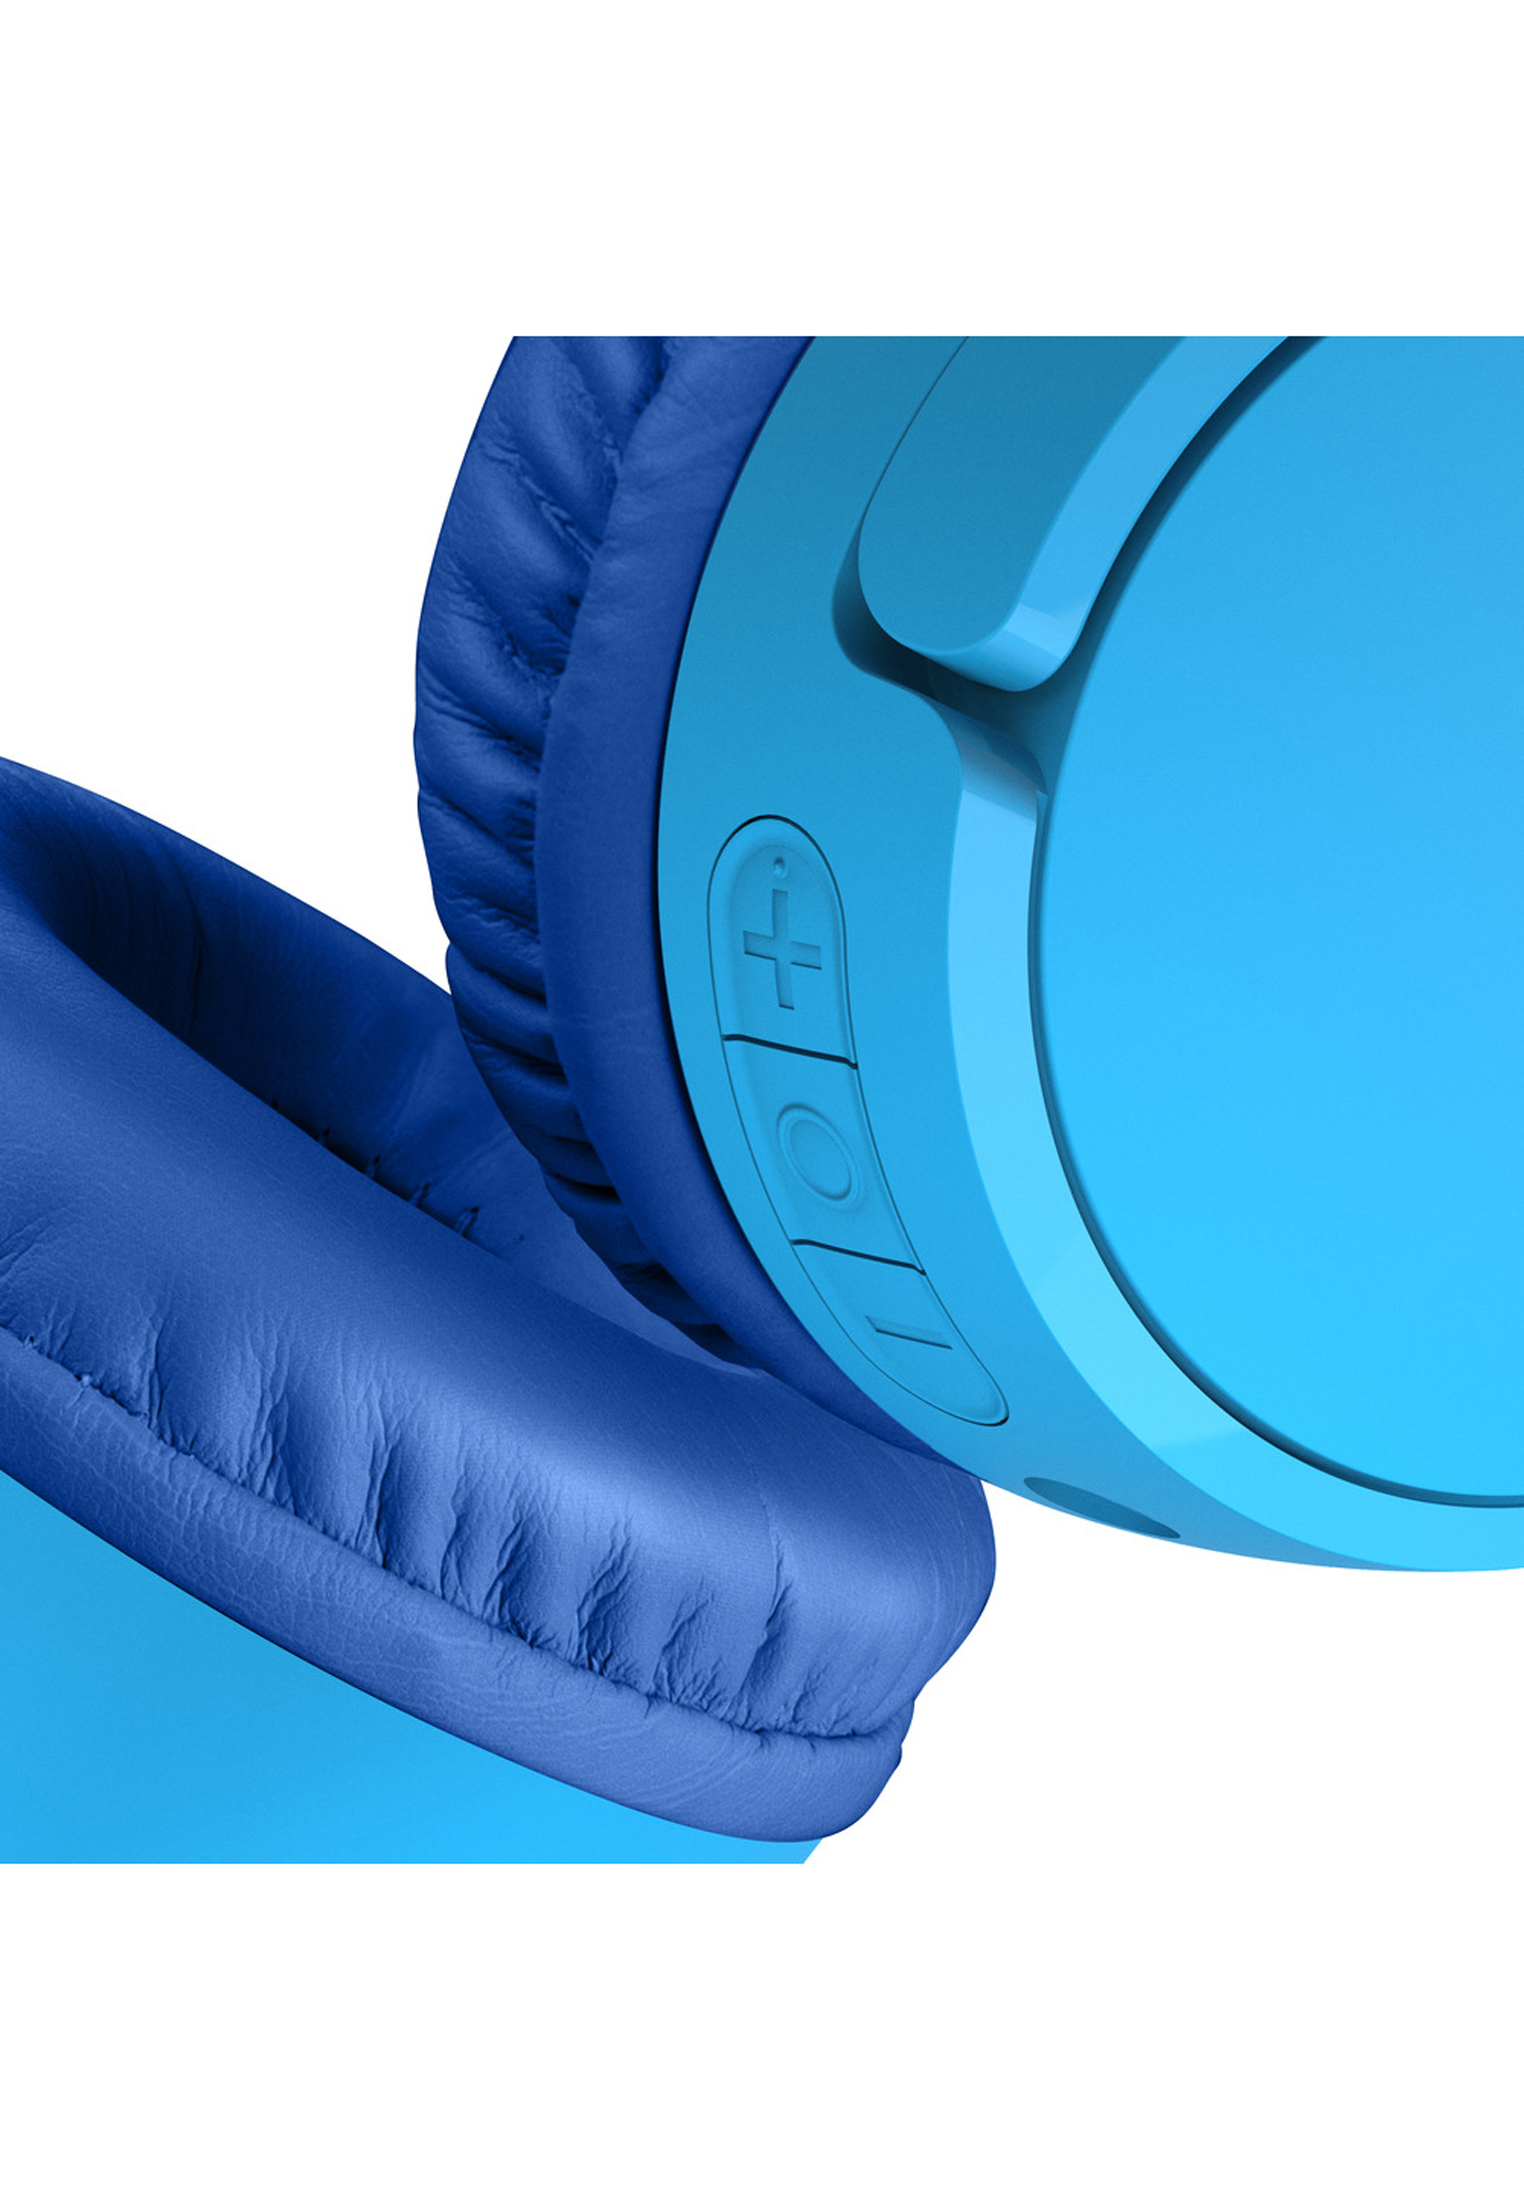 BELKIN SOUNDFORM™ Mini, On-ear On-Ear-Kinderkopfhörer Bluetooth blau